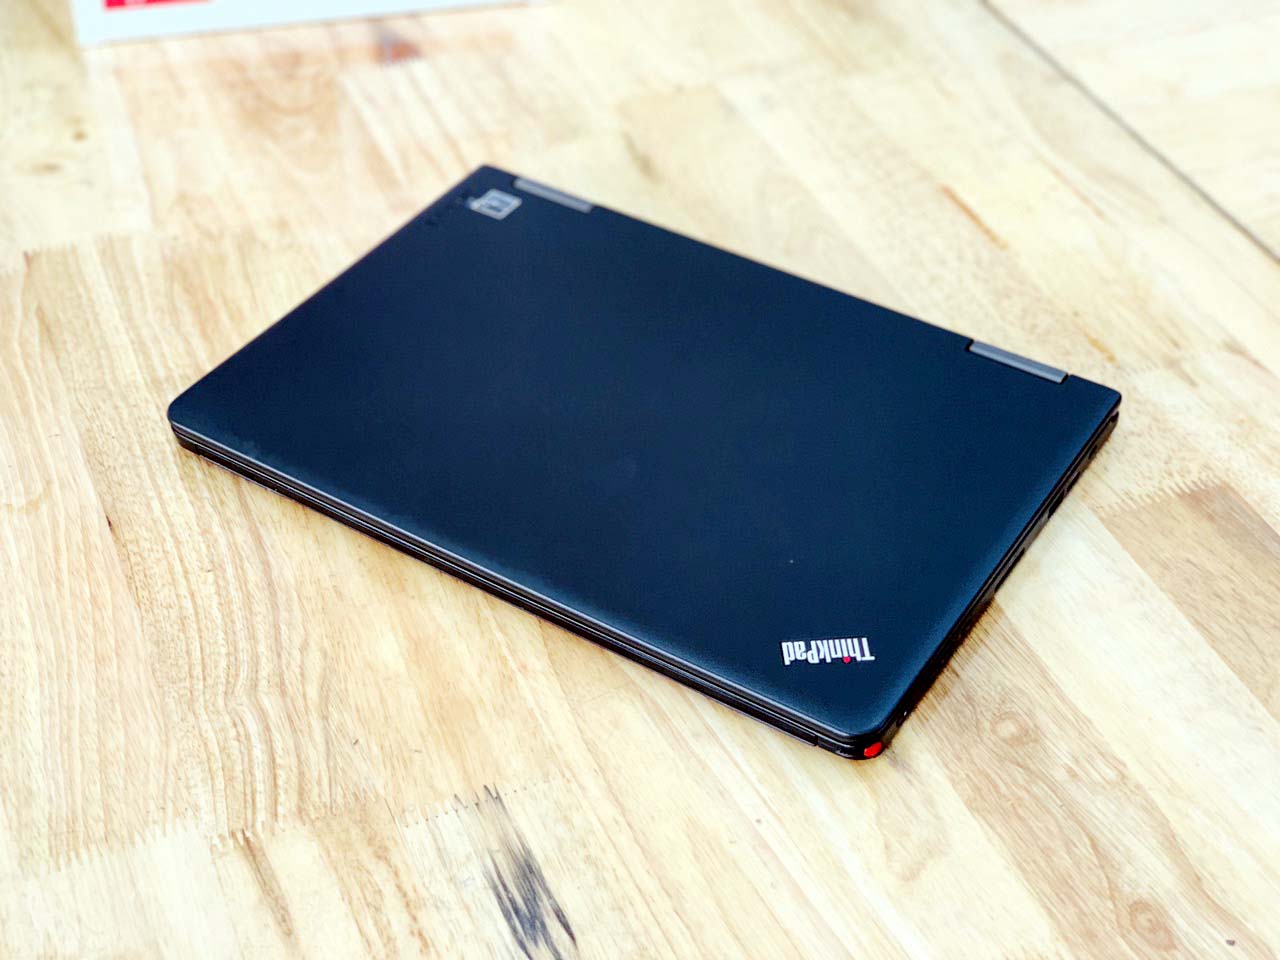 Laptop Lenovo Thinkpad Yoga S1 i7-4500U Ram 8GB SSD 256GB 12.5 inch Full HD Cảm Ứng Xoay 360 Độ